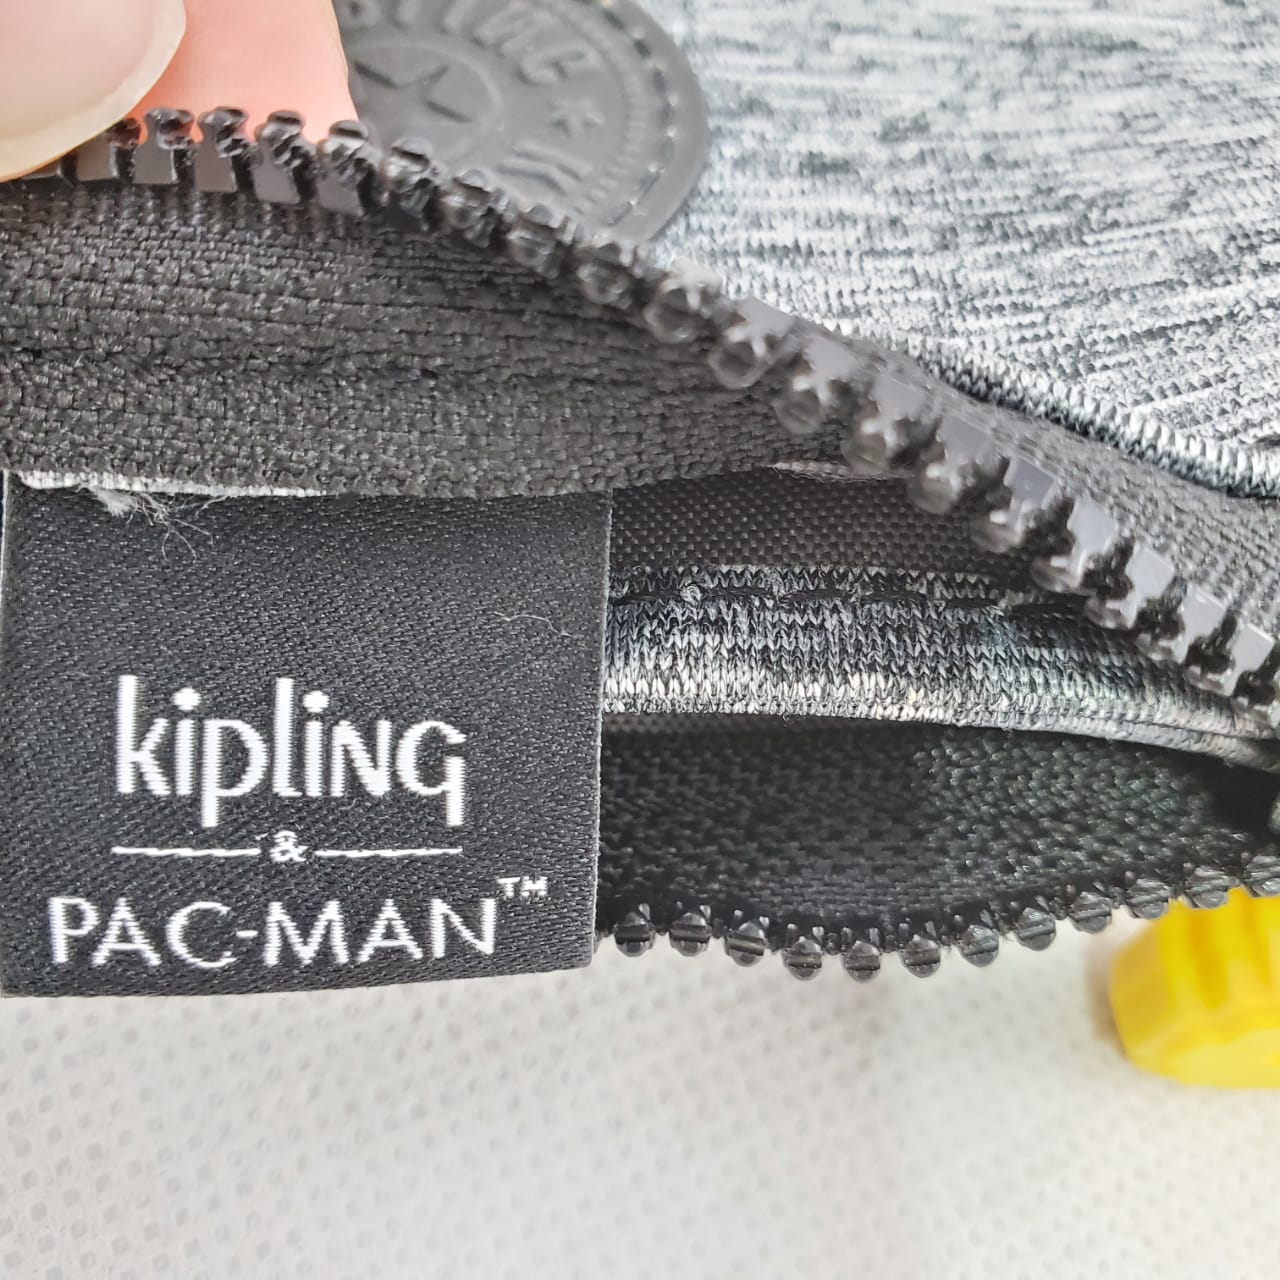 Monedero Kipling Mini Pac Man Ed. Especial! - illa Elite Fashion Suppliers